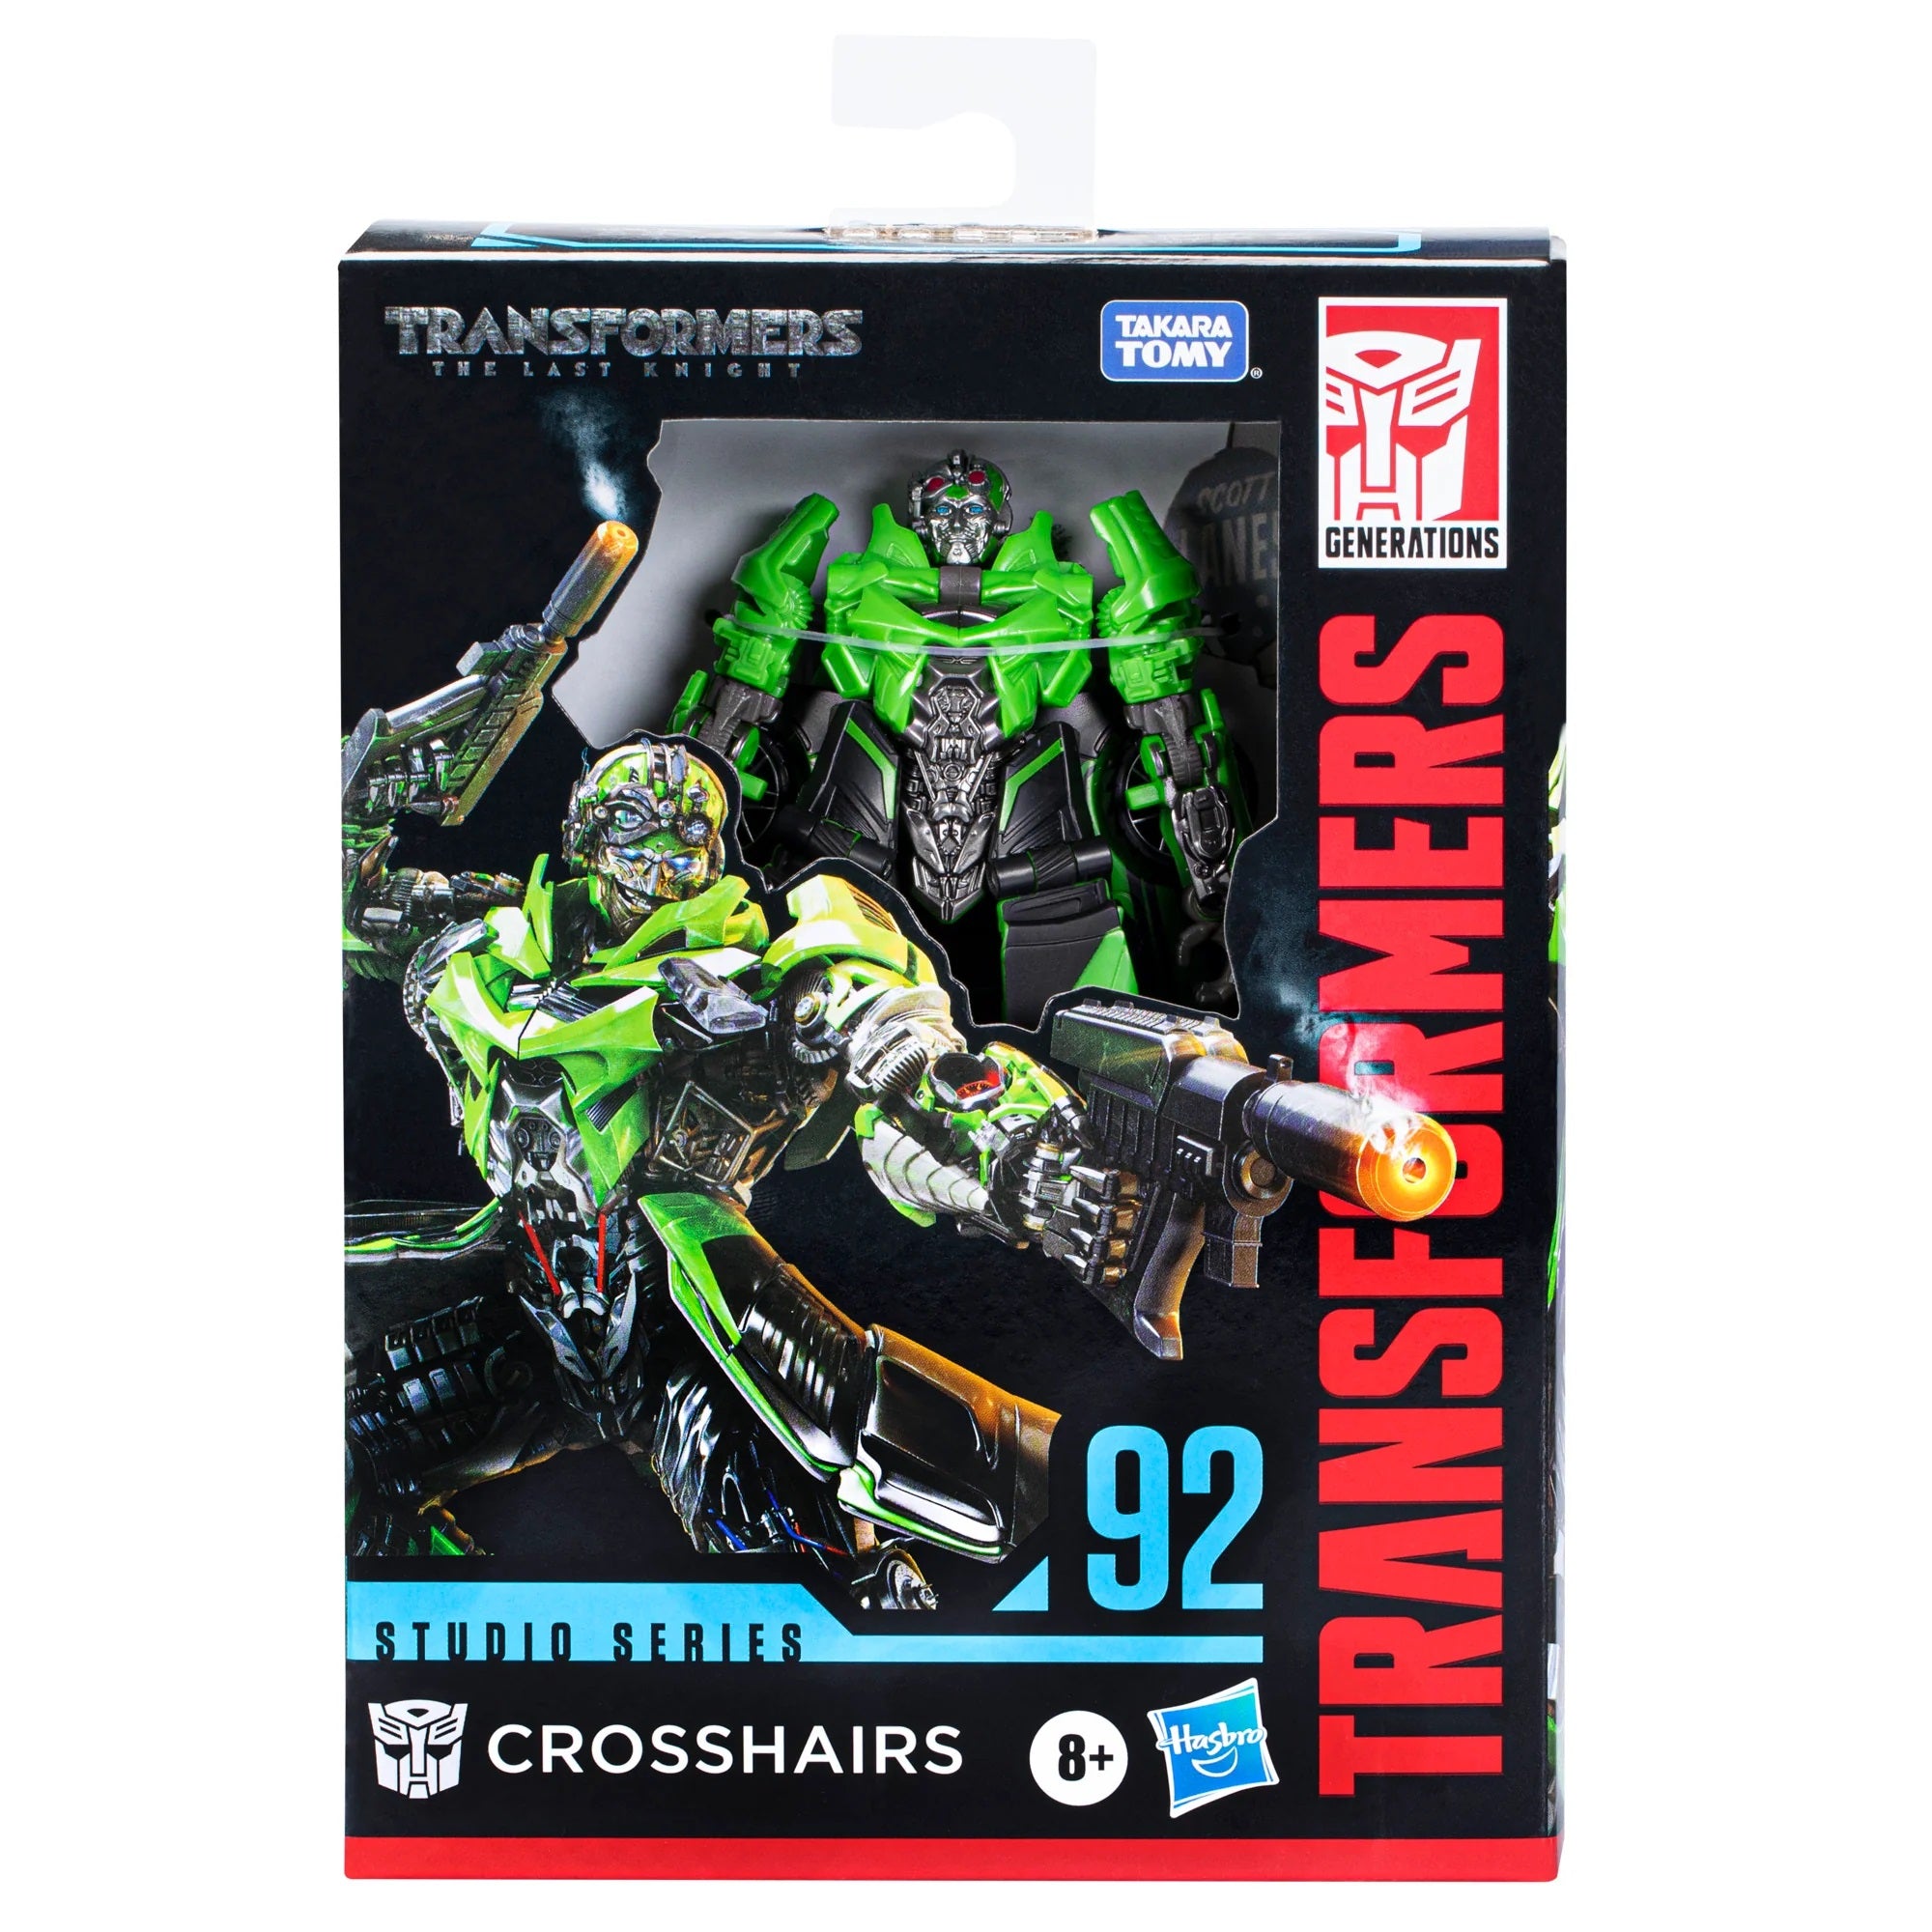 Transformers Studio Series Crosshairs Action Figure 92